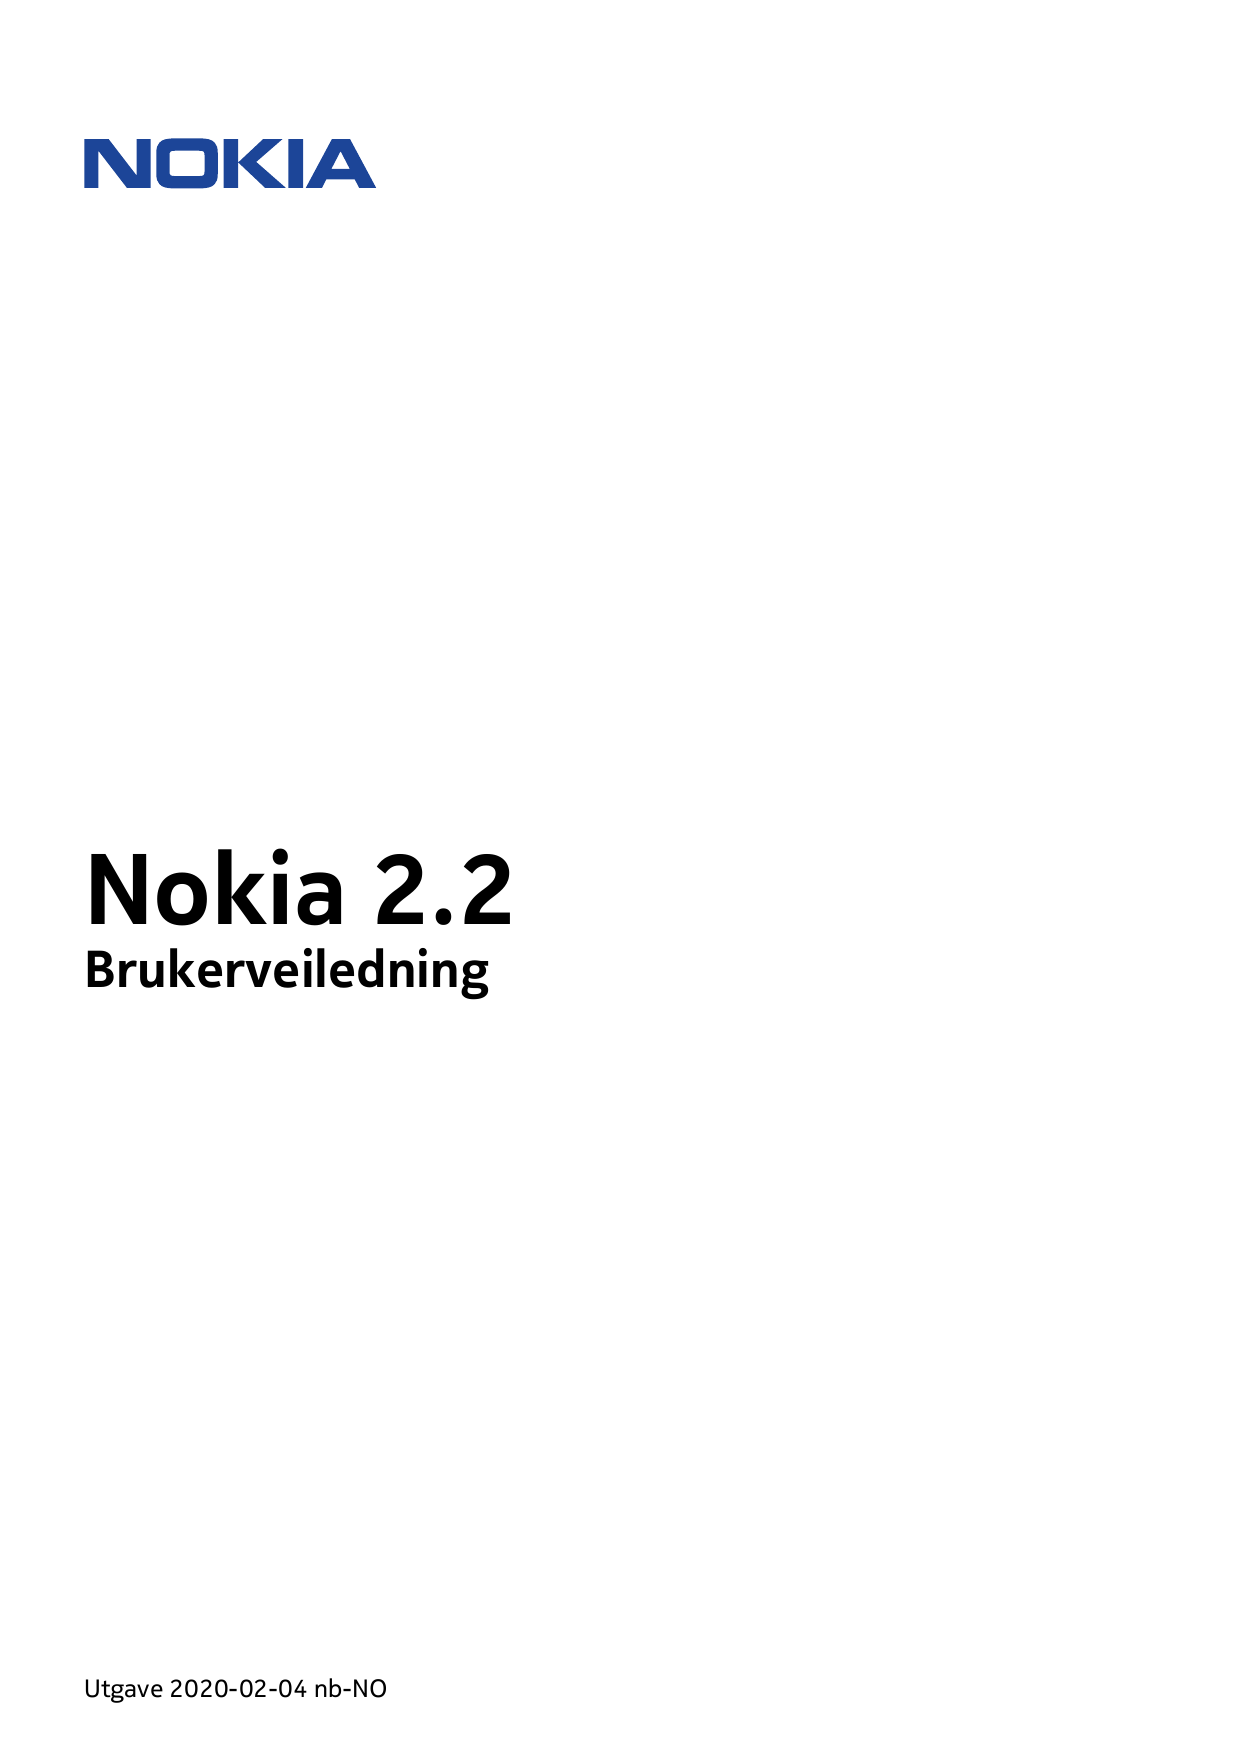 Nokia 2.2BrukerveiledningUtgave 2020-02-04 nb-NO